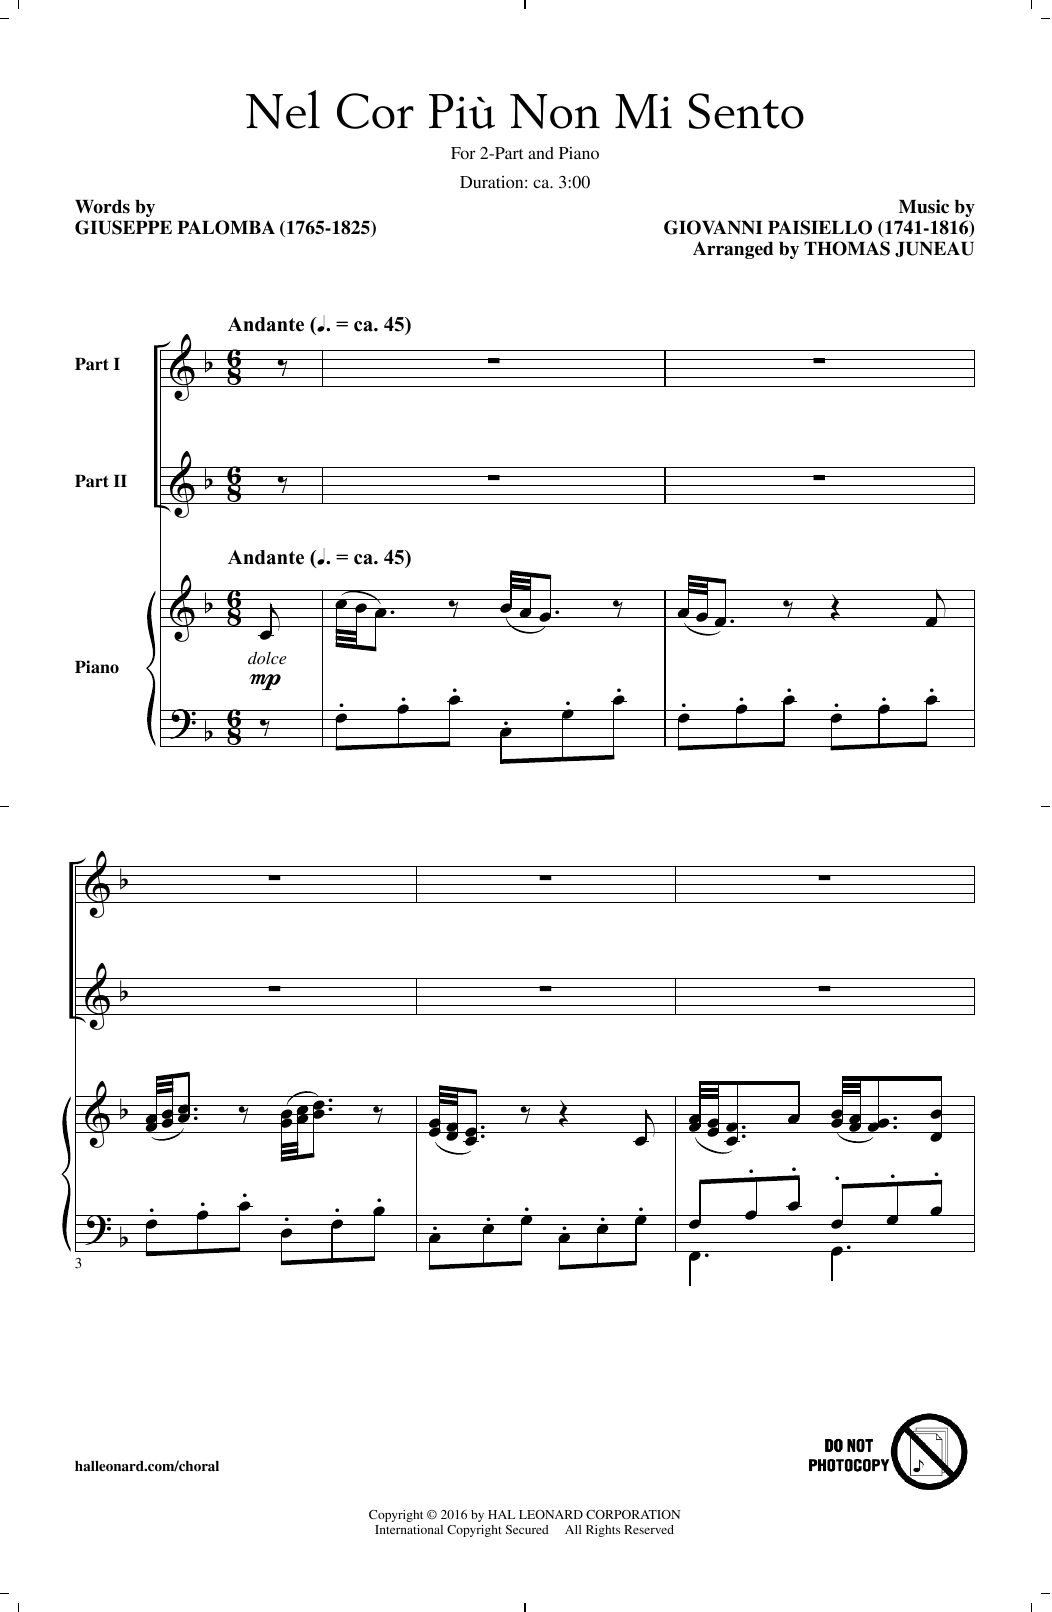 Thomas Juneau Nel Cor Piu Non Mi Sento Sheet Music Notes & Chords for 2-Part Choir - Download or Print PDF